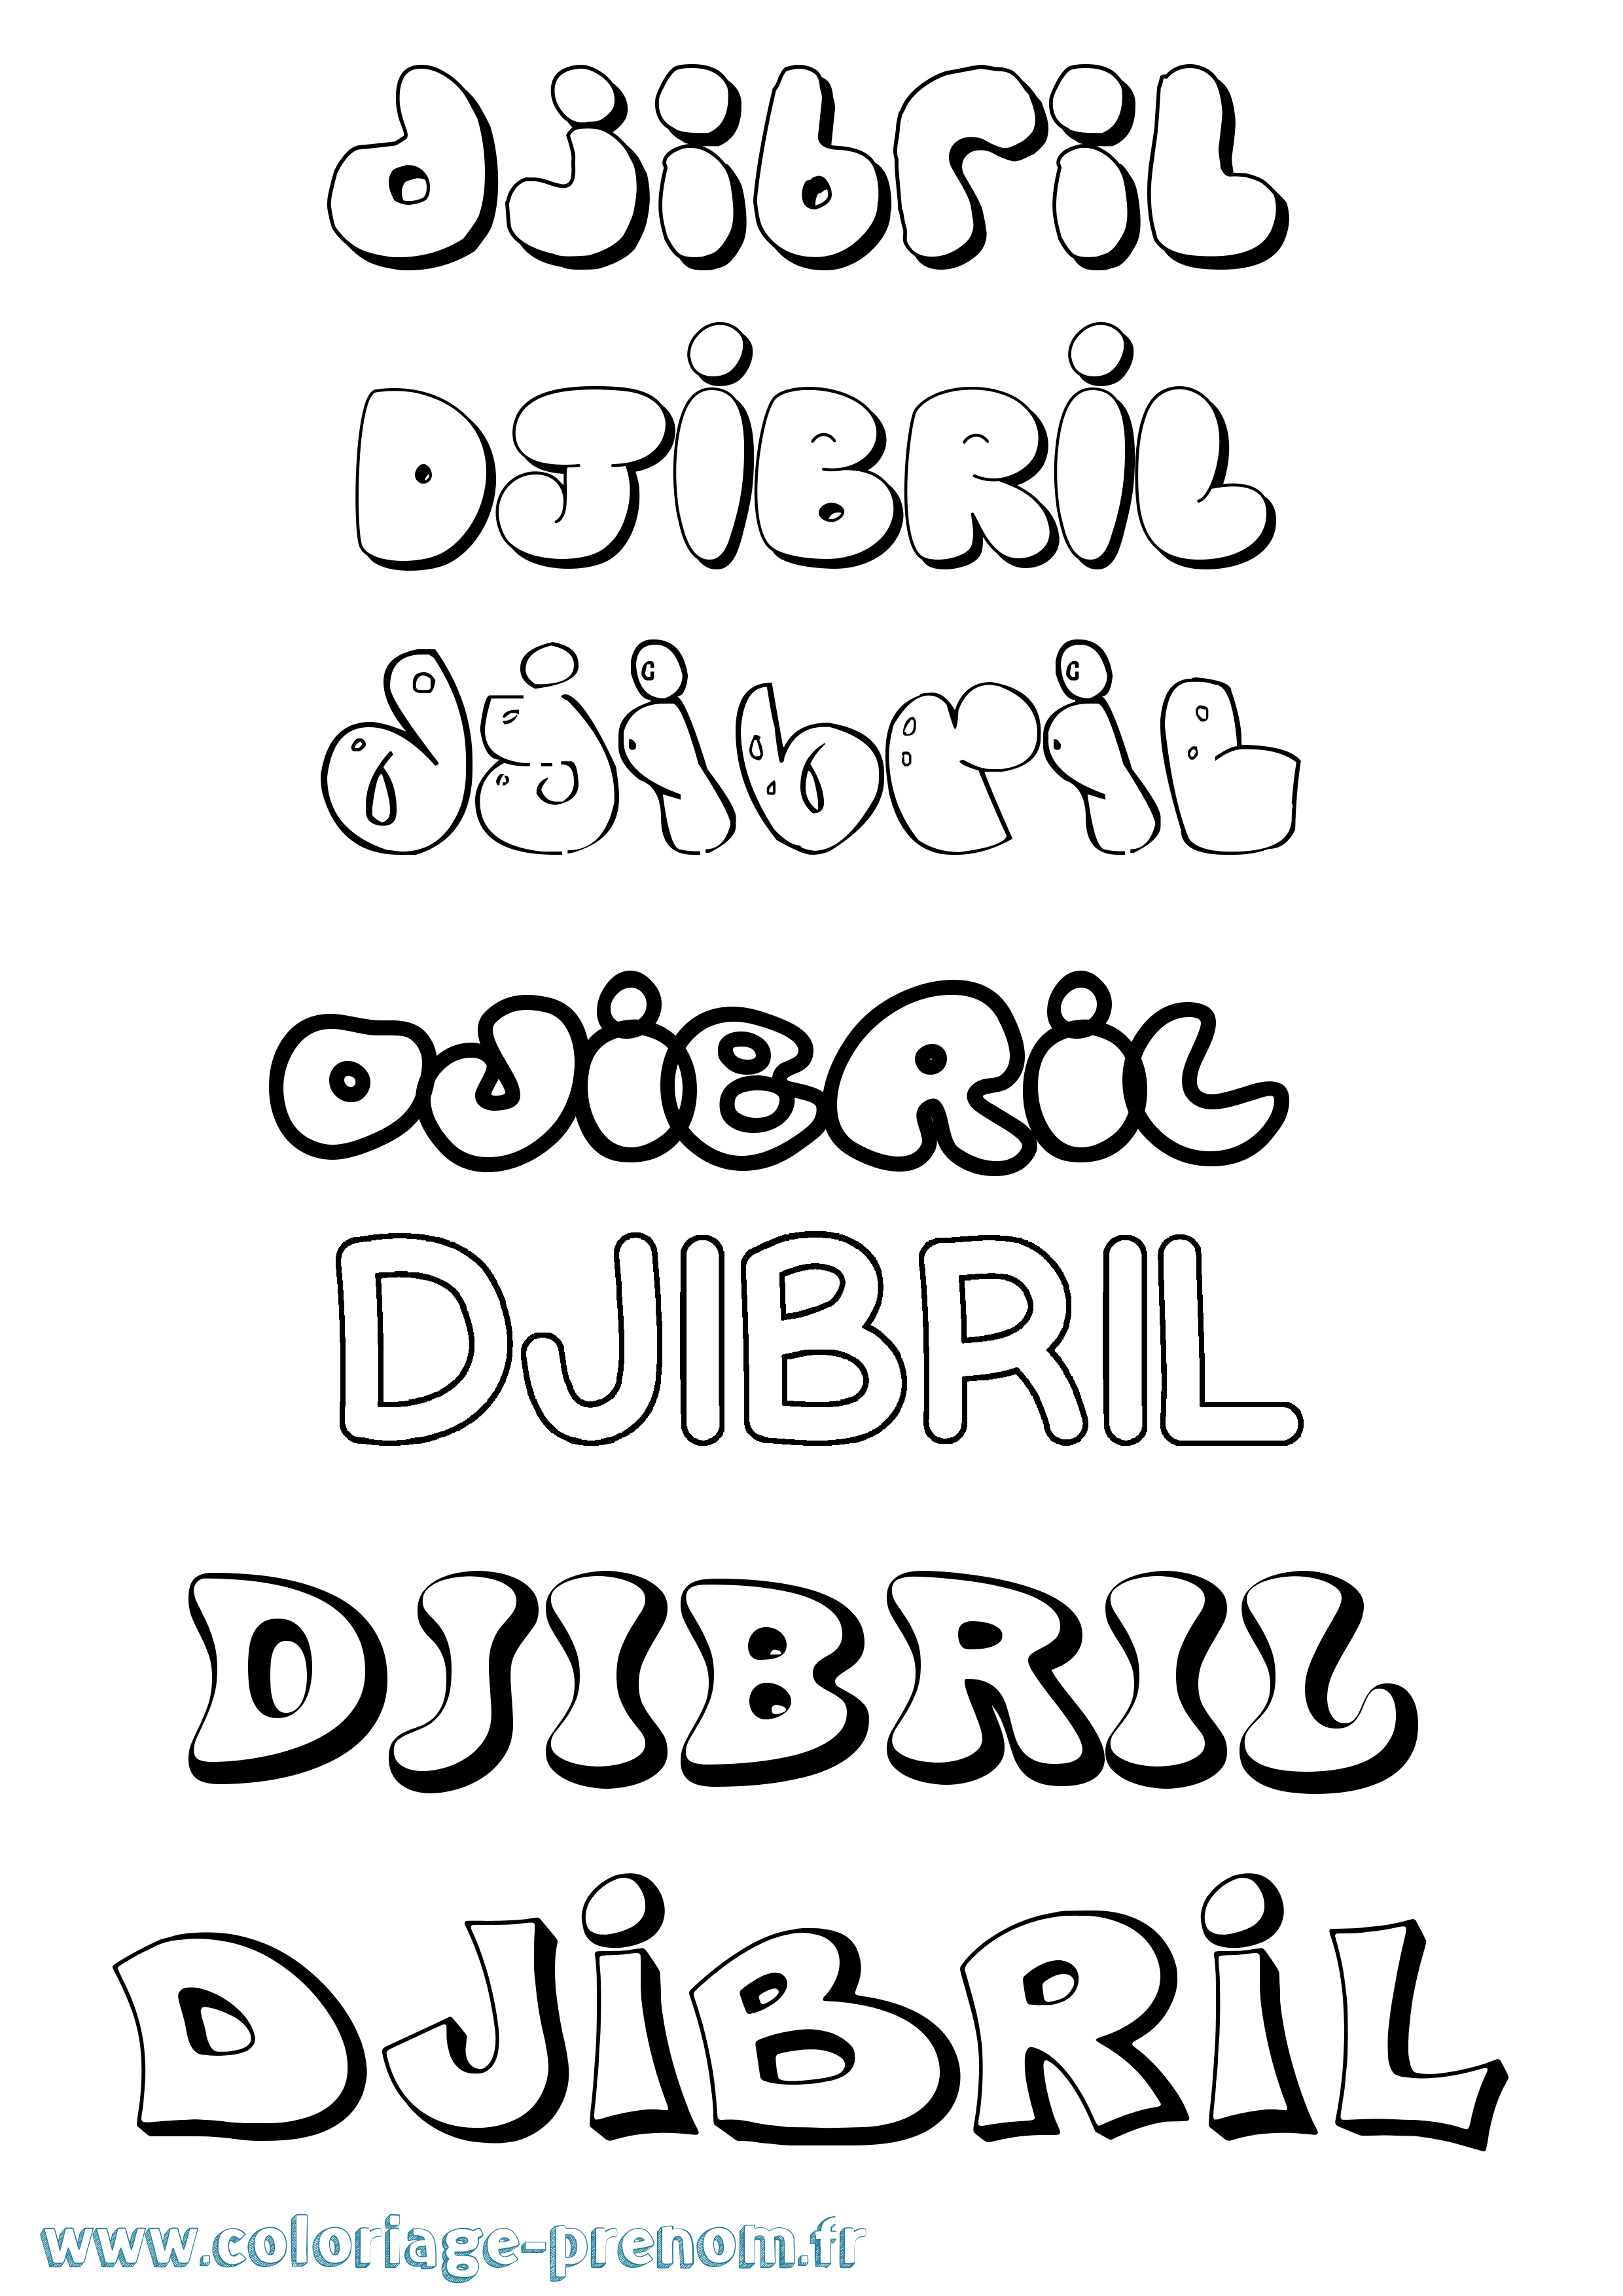 Coloriage prénom Djibril Bubble